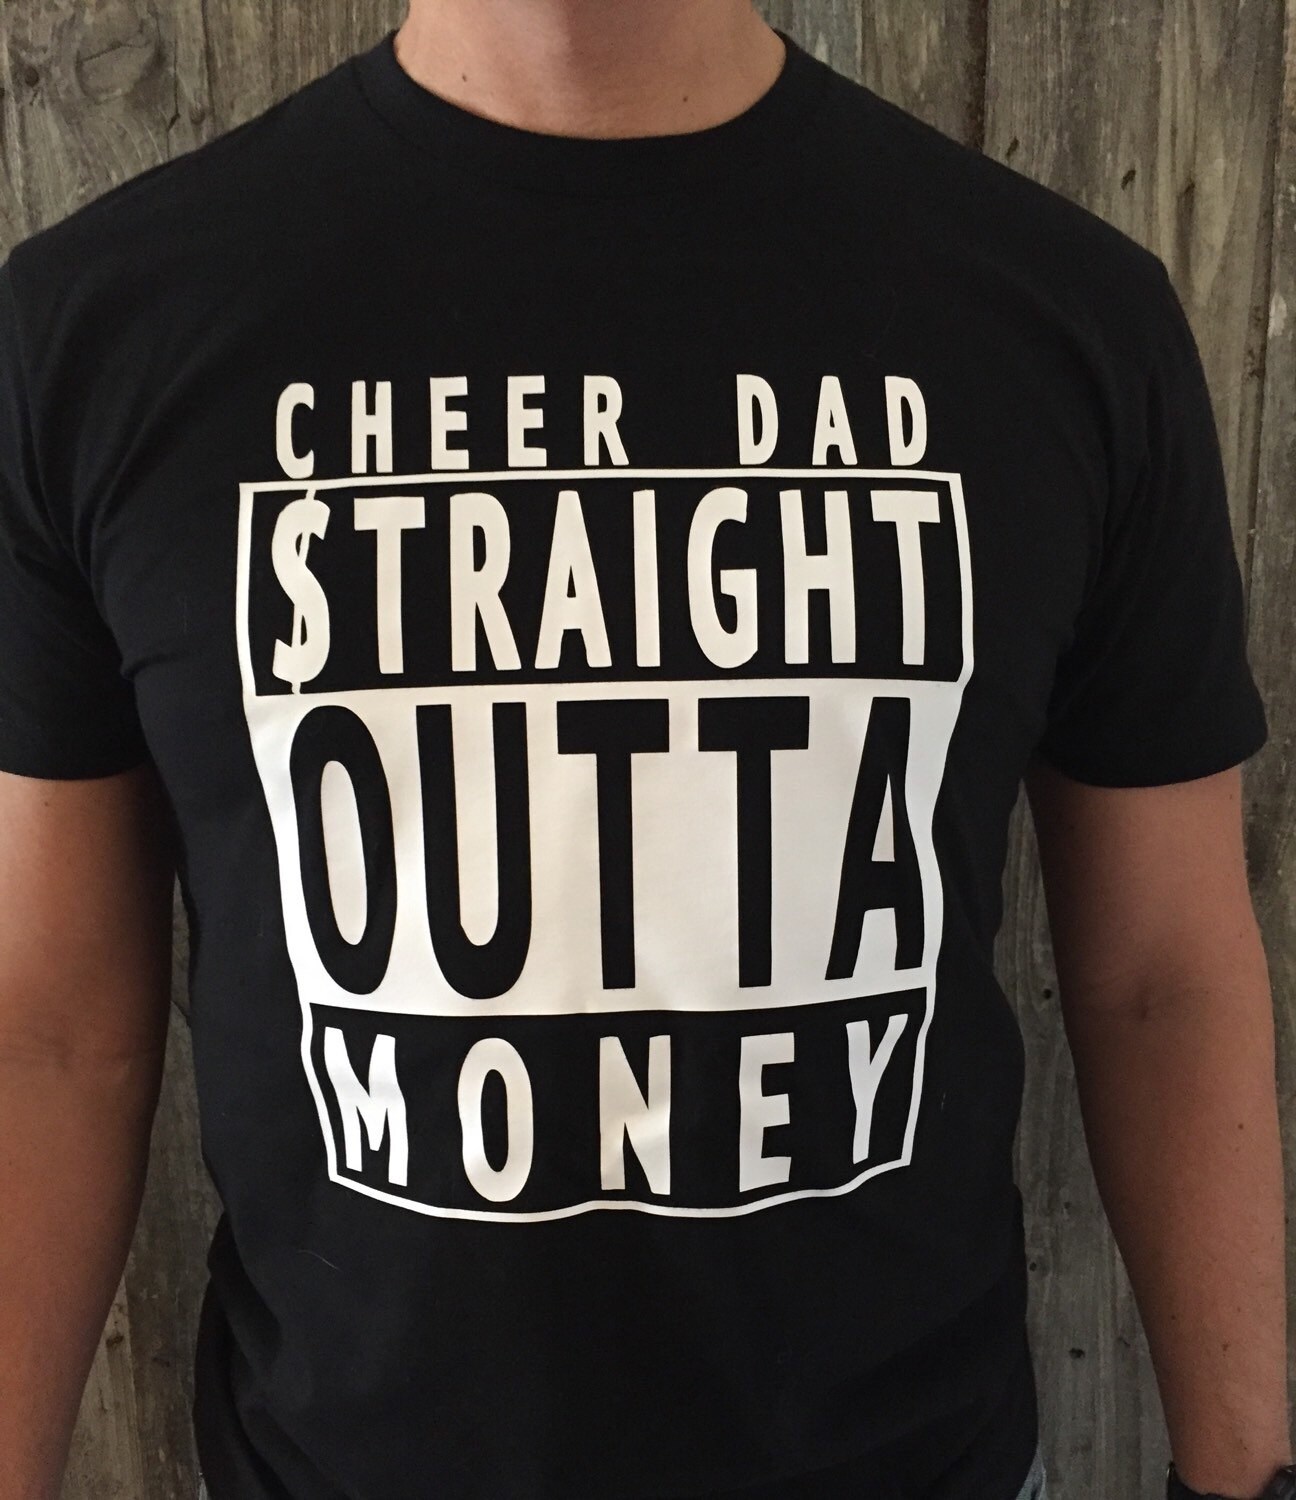 Cheer Dad Shirt Cheer Dad STRAIGHT OUTTA MONEY by TheCheerShack